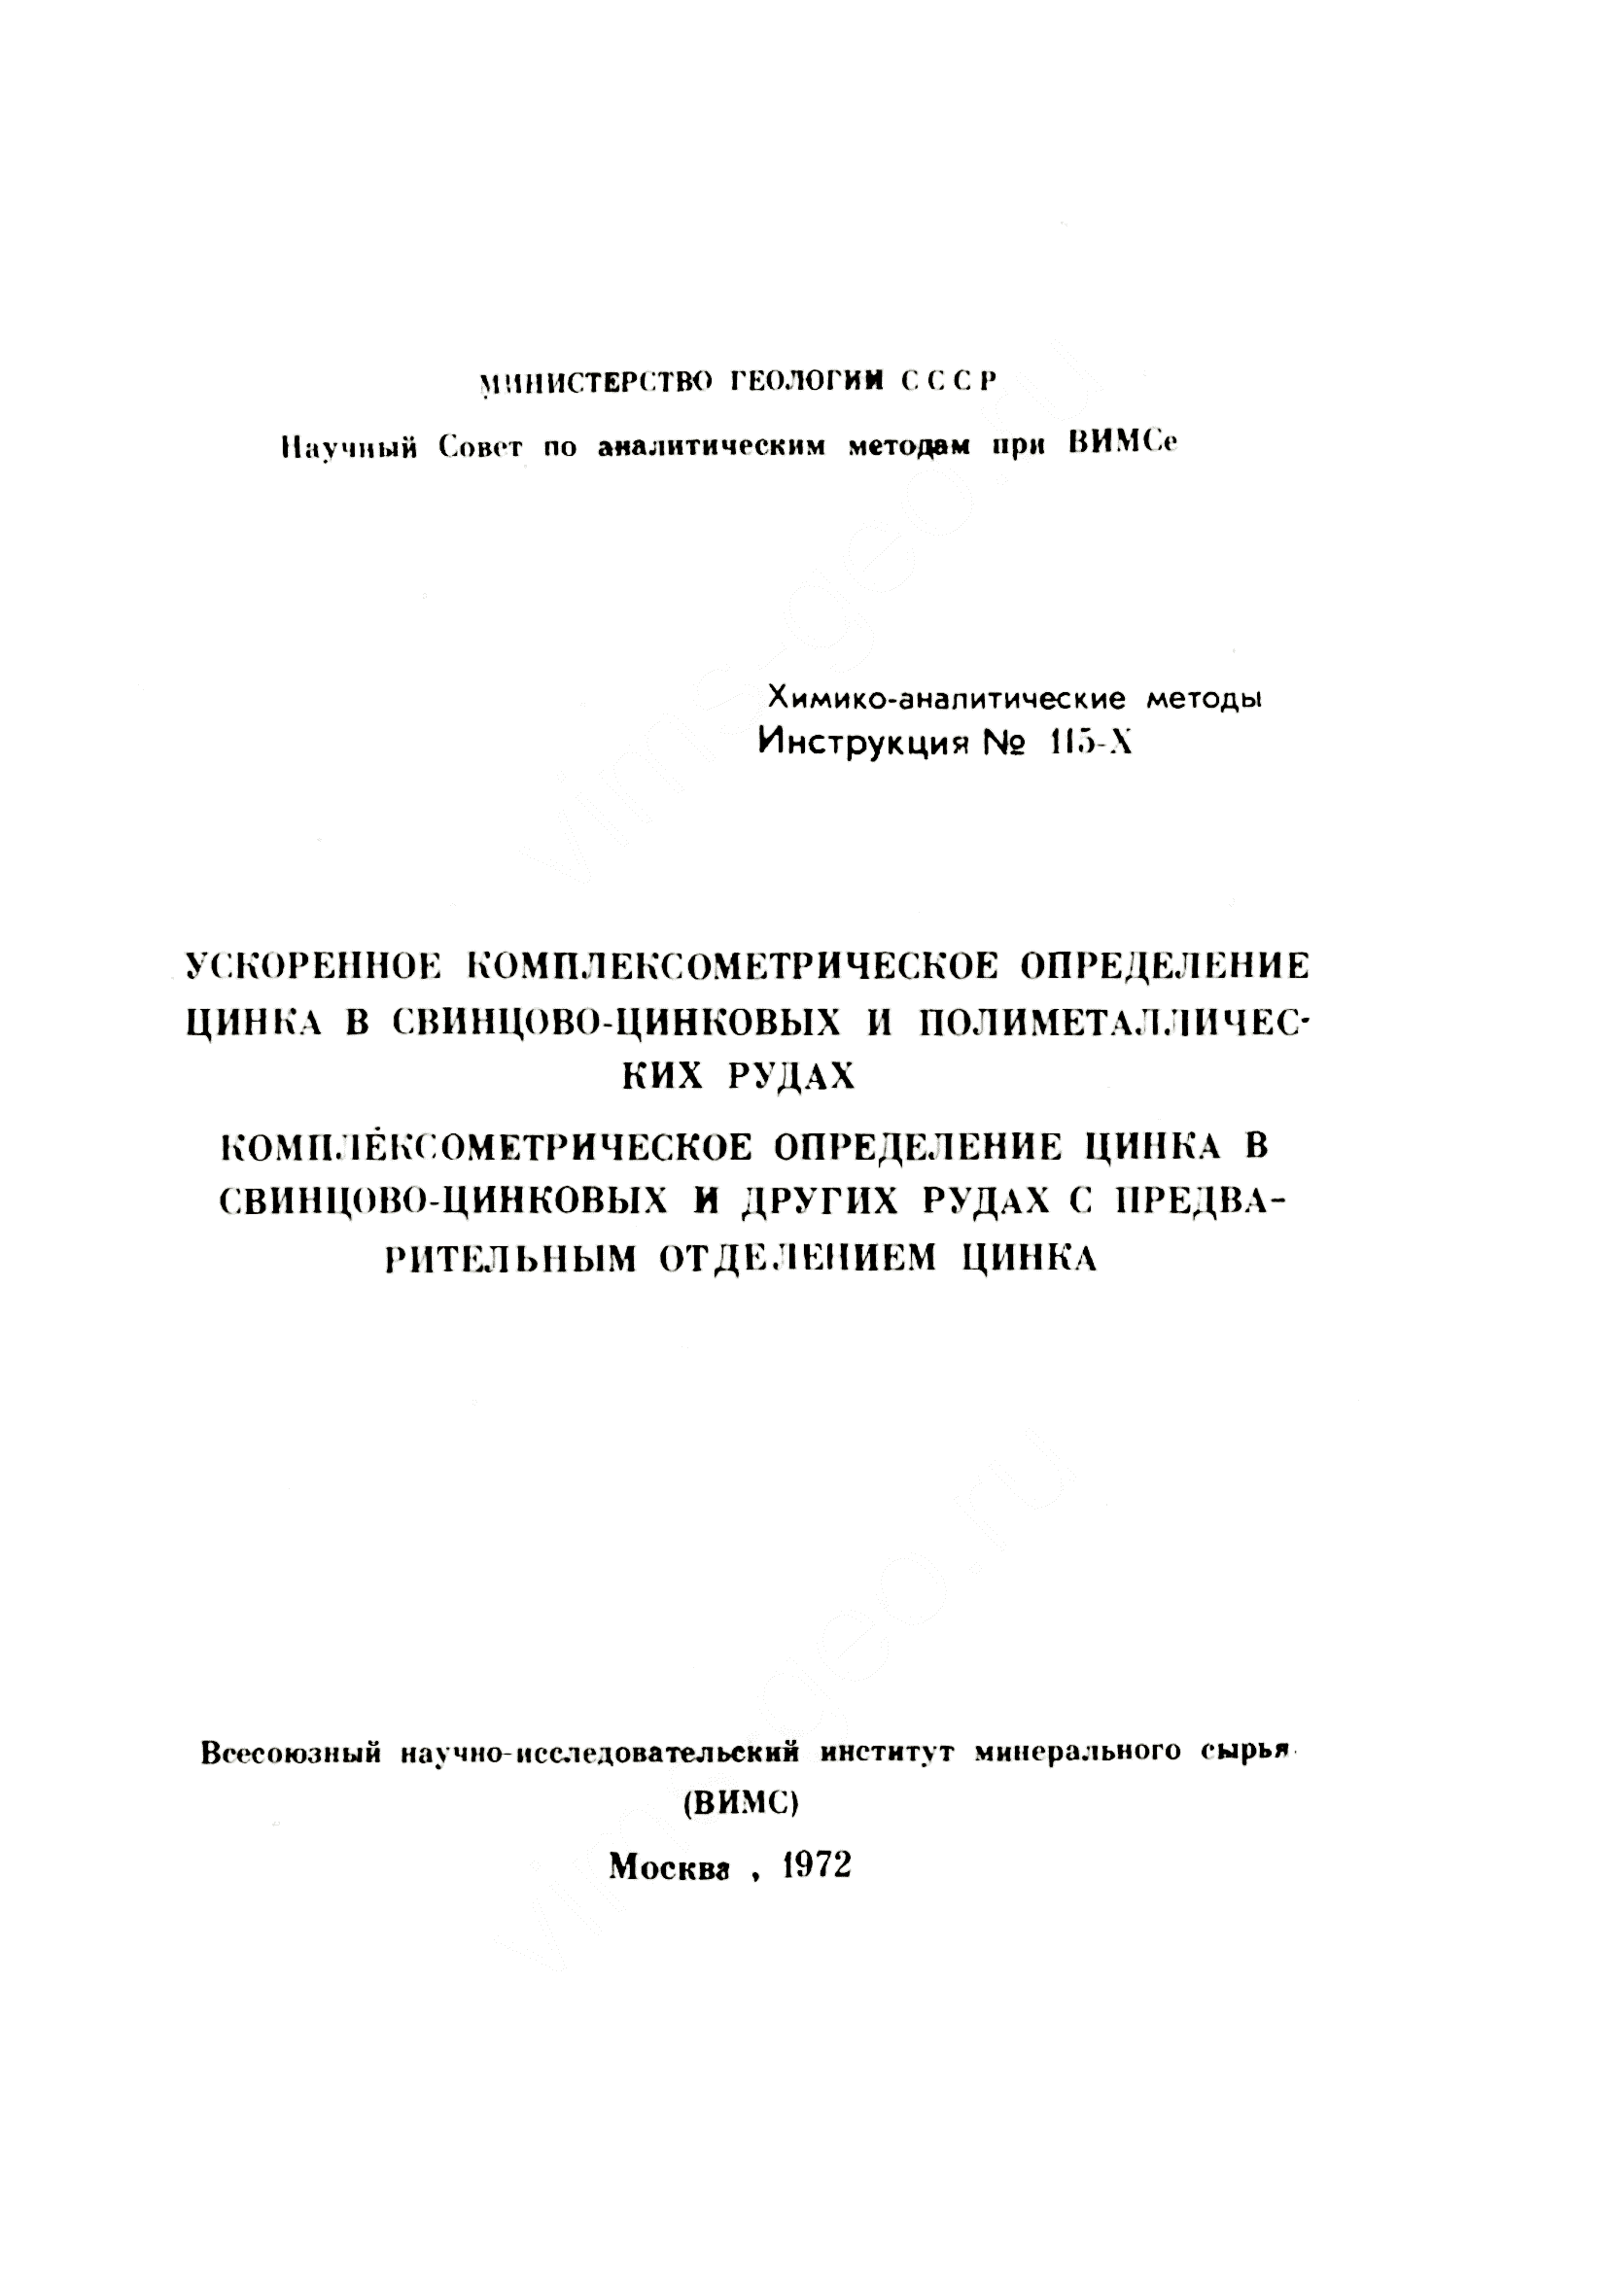 Инструкция НСАМ 115-Х